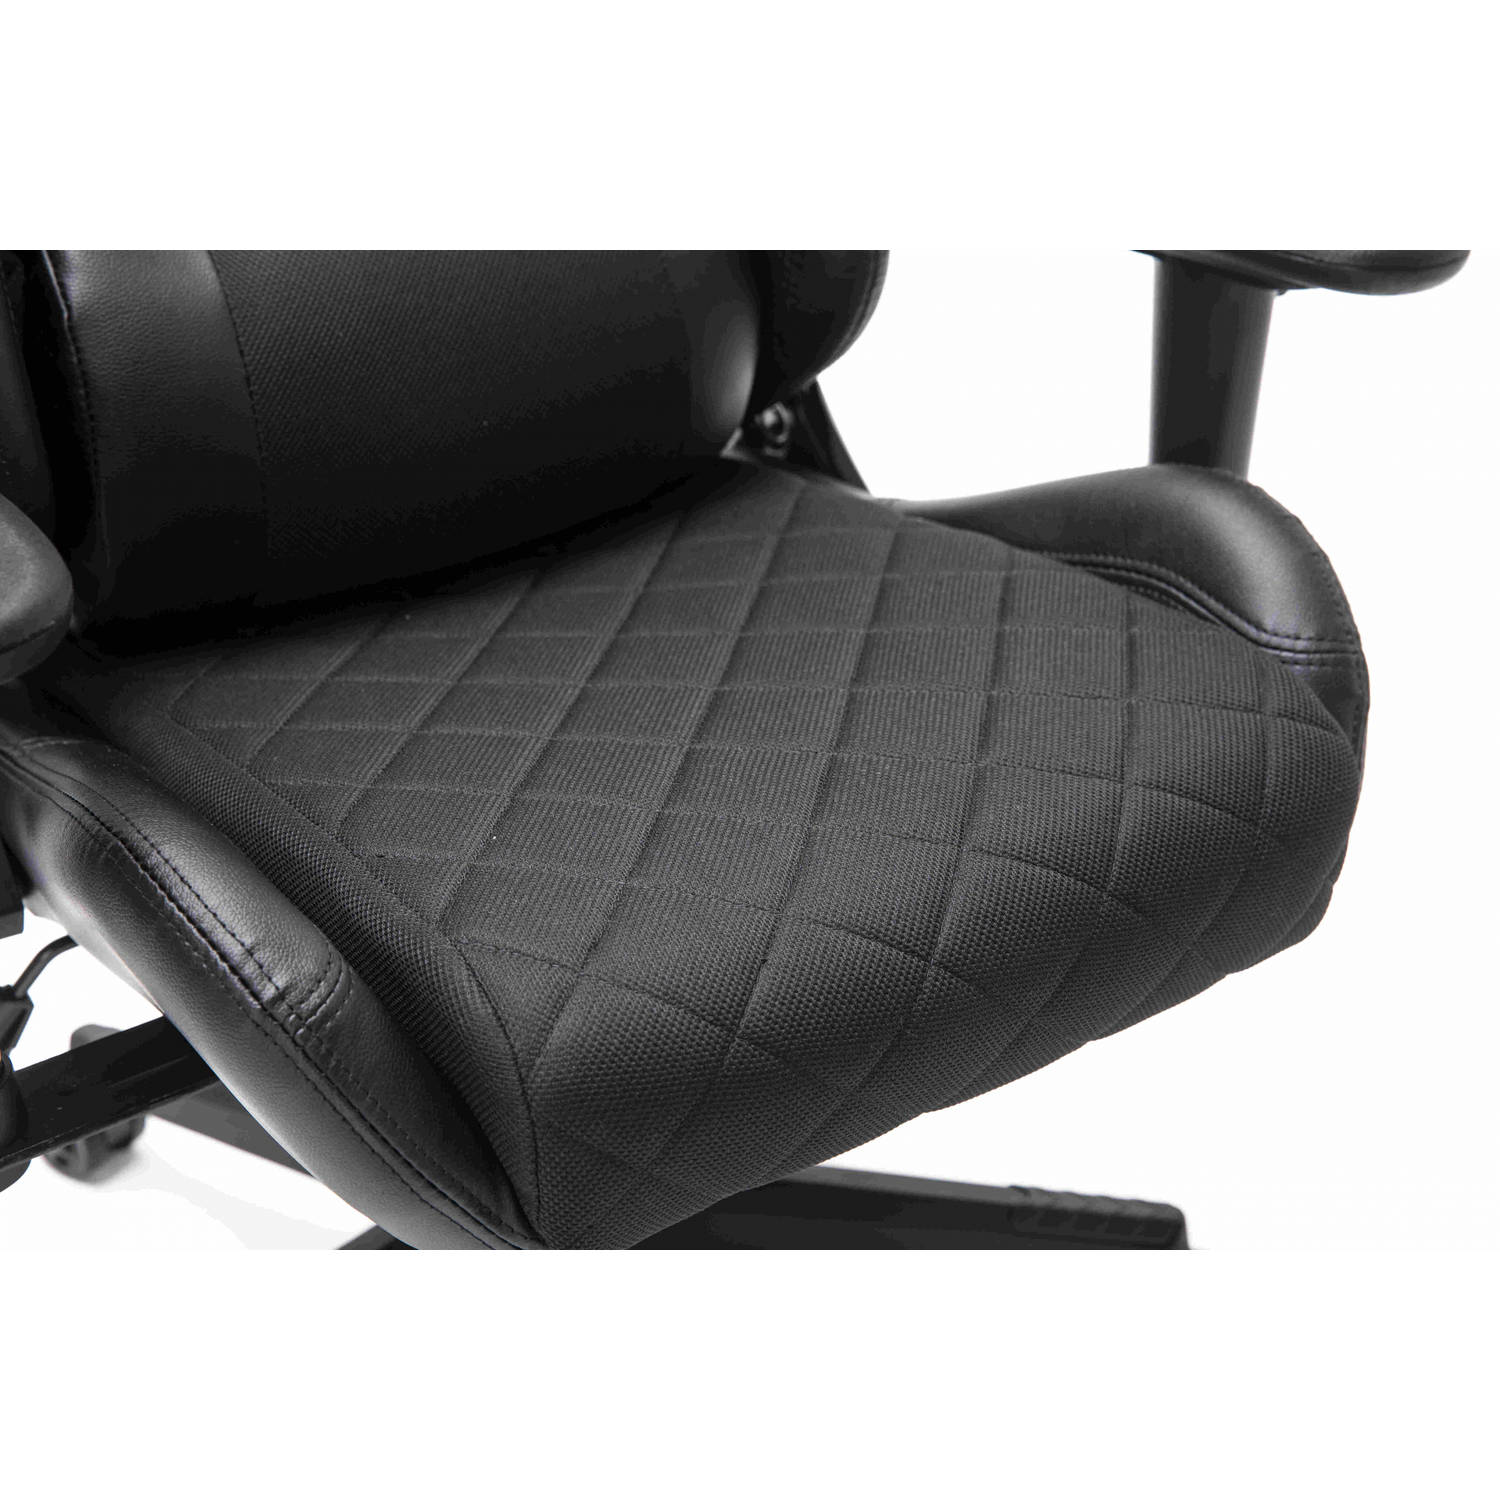 Hou op wacht Nadruk Gamestoel Classic - bureaustoel - stof bekleding - zwart | Blokker